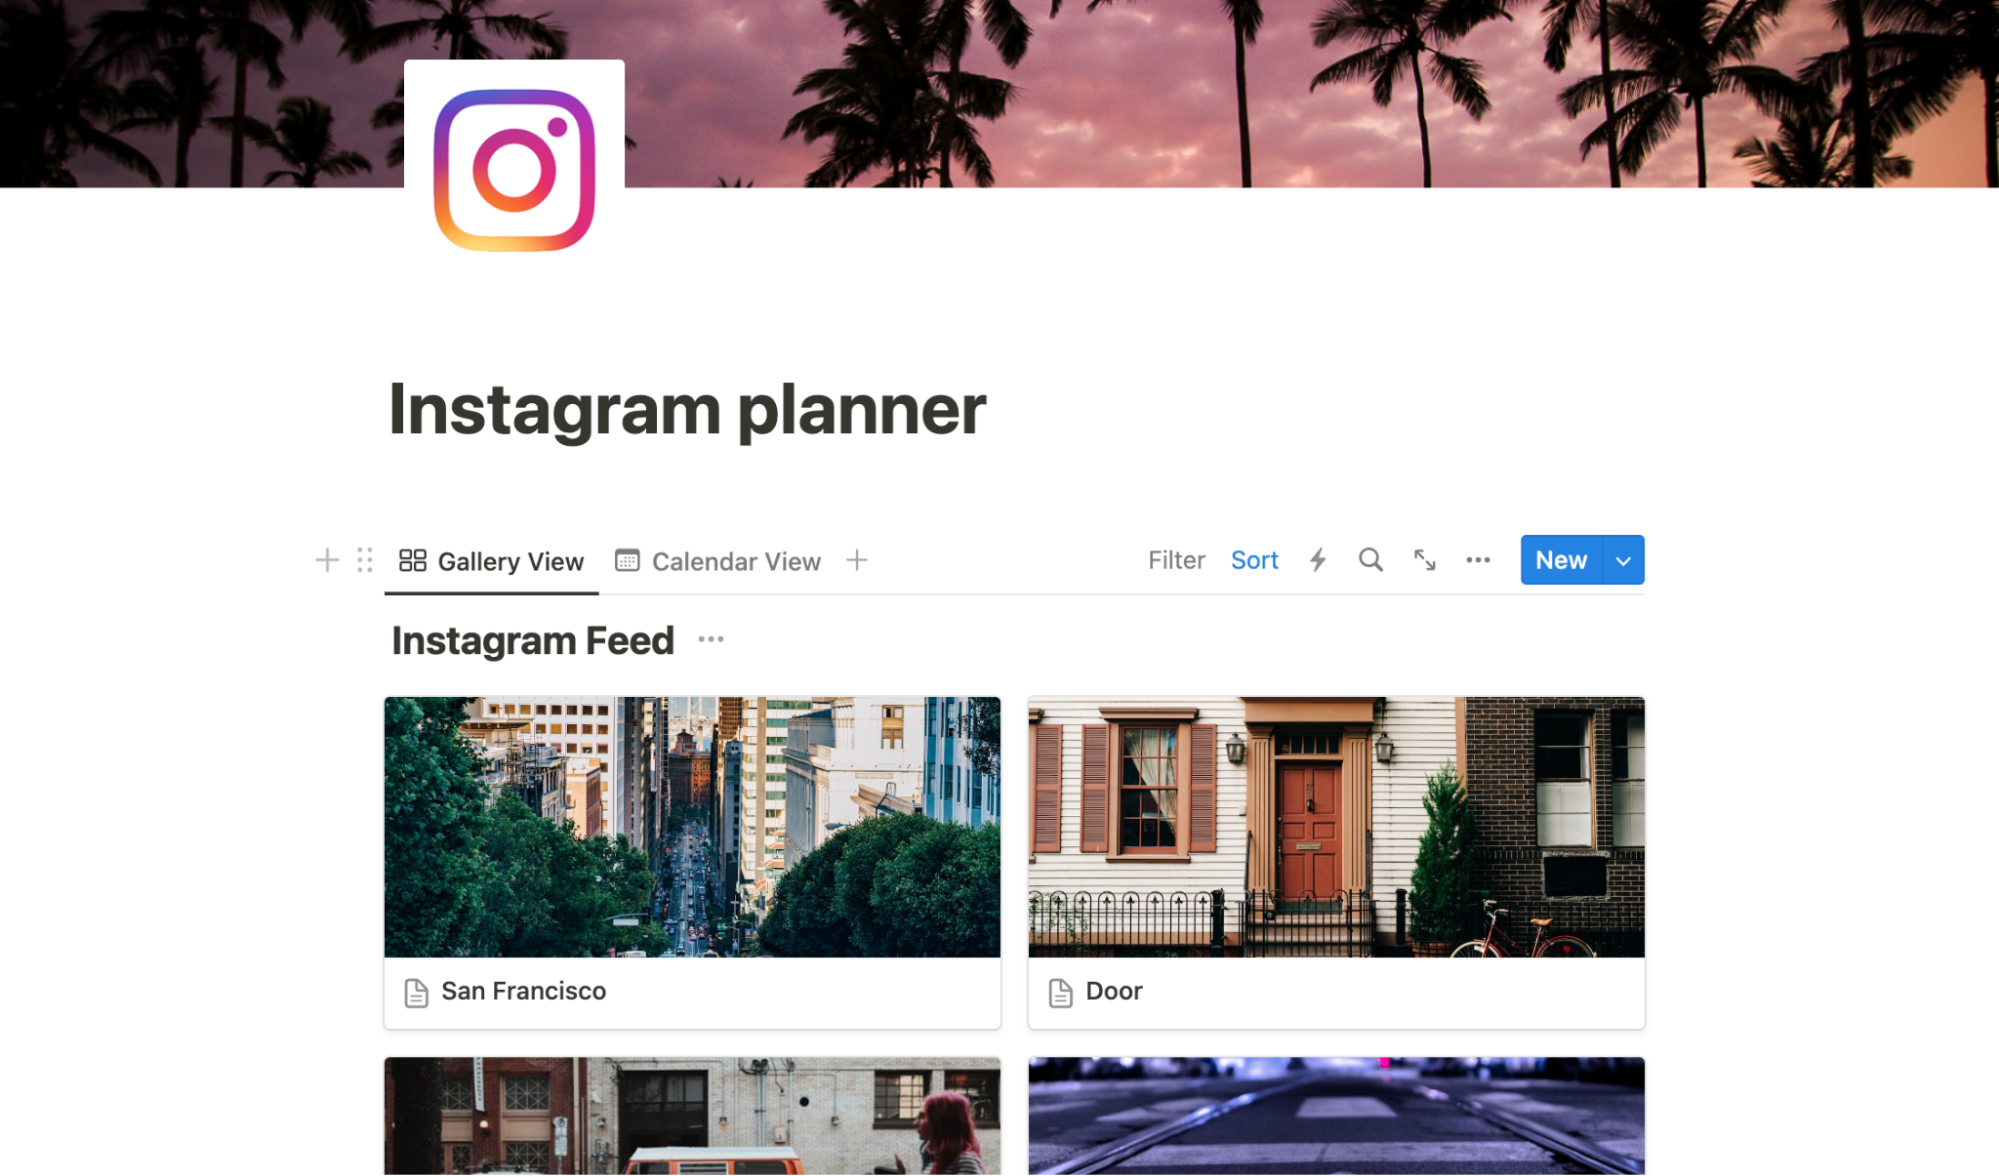 Instagram planner